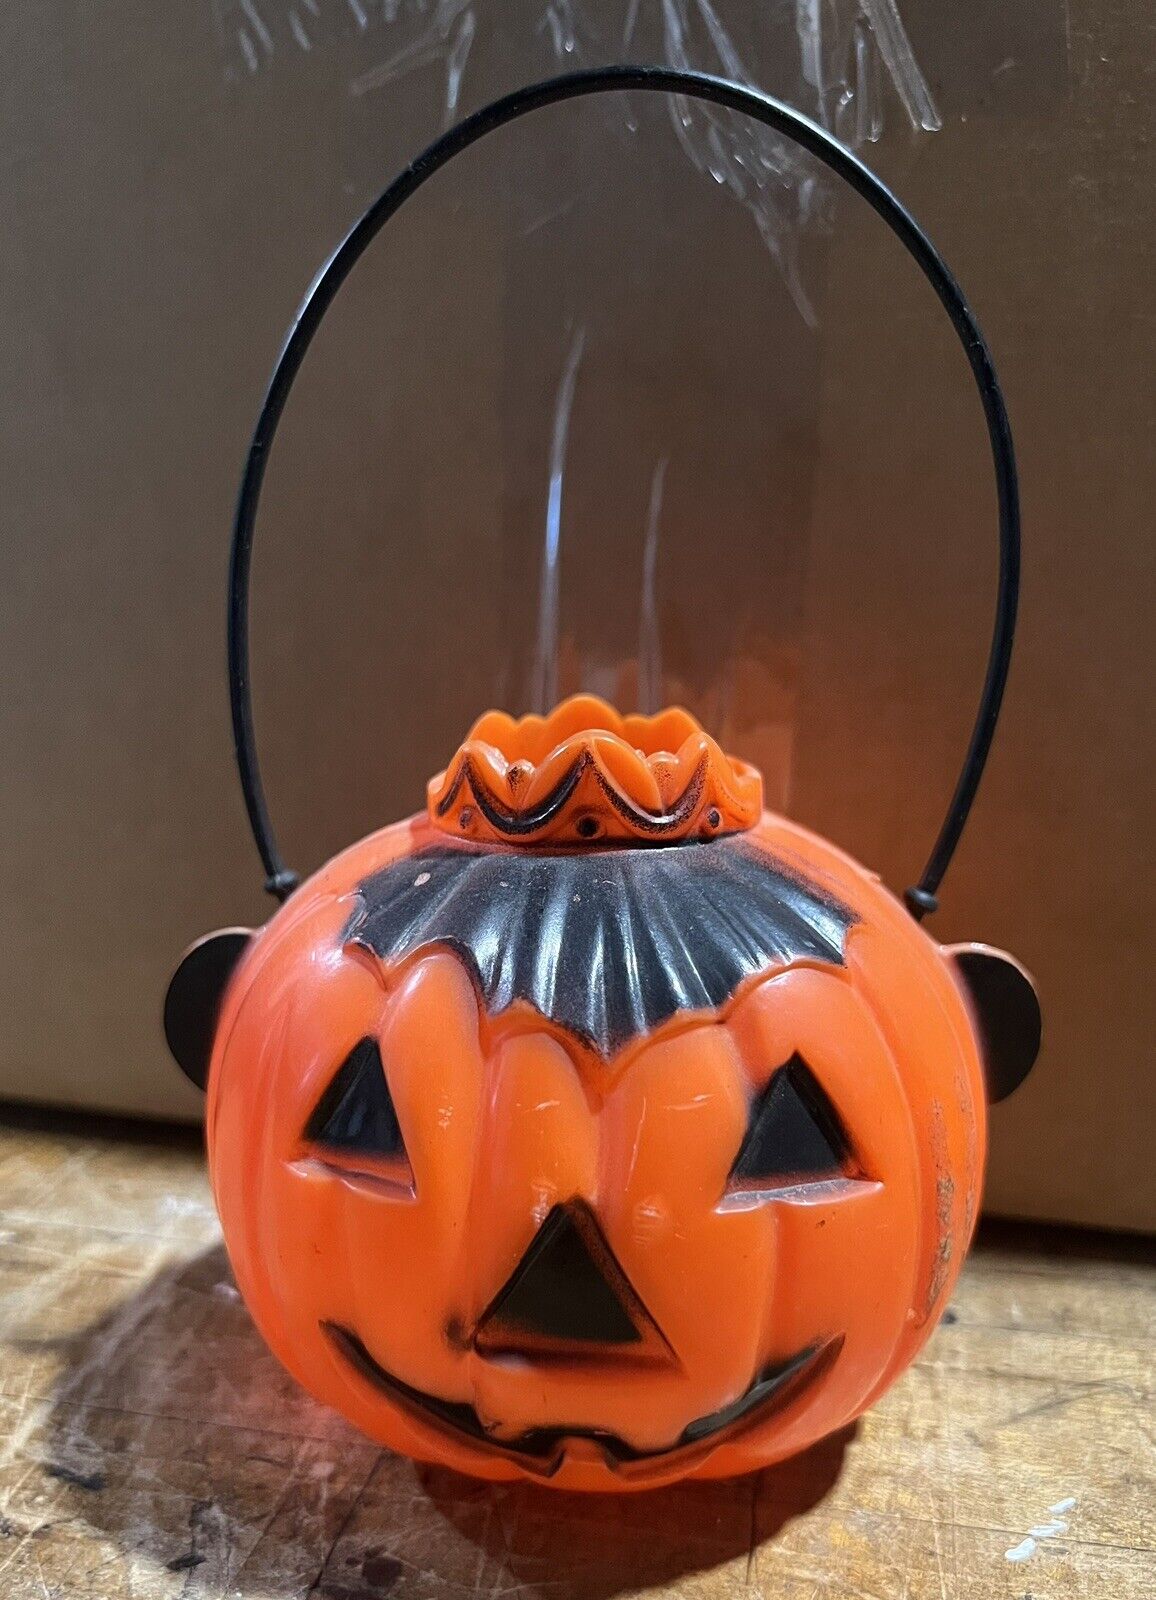 Vintage Halloween Pumpkin Candy Holder by Rosbro Plastics Prov. R.I.